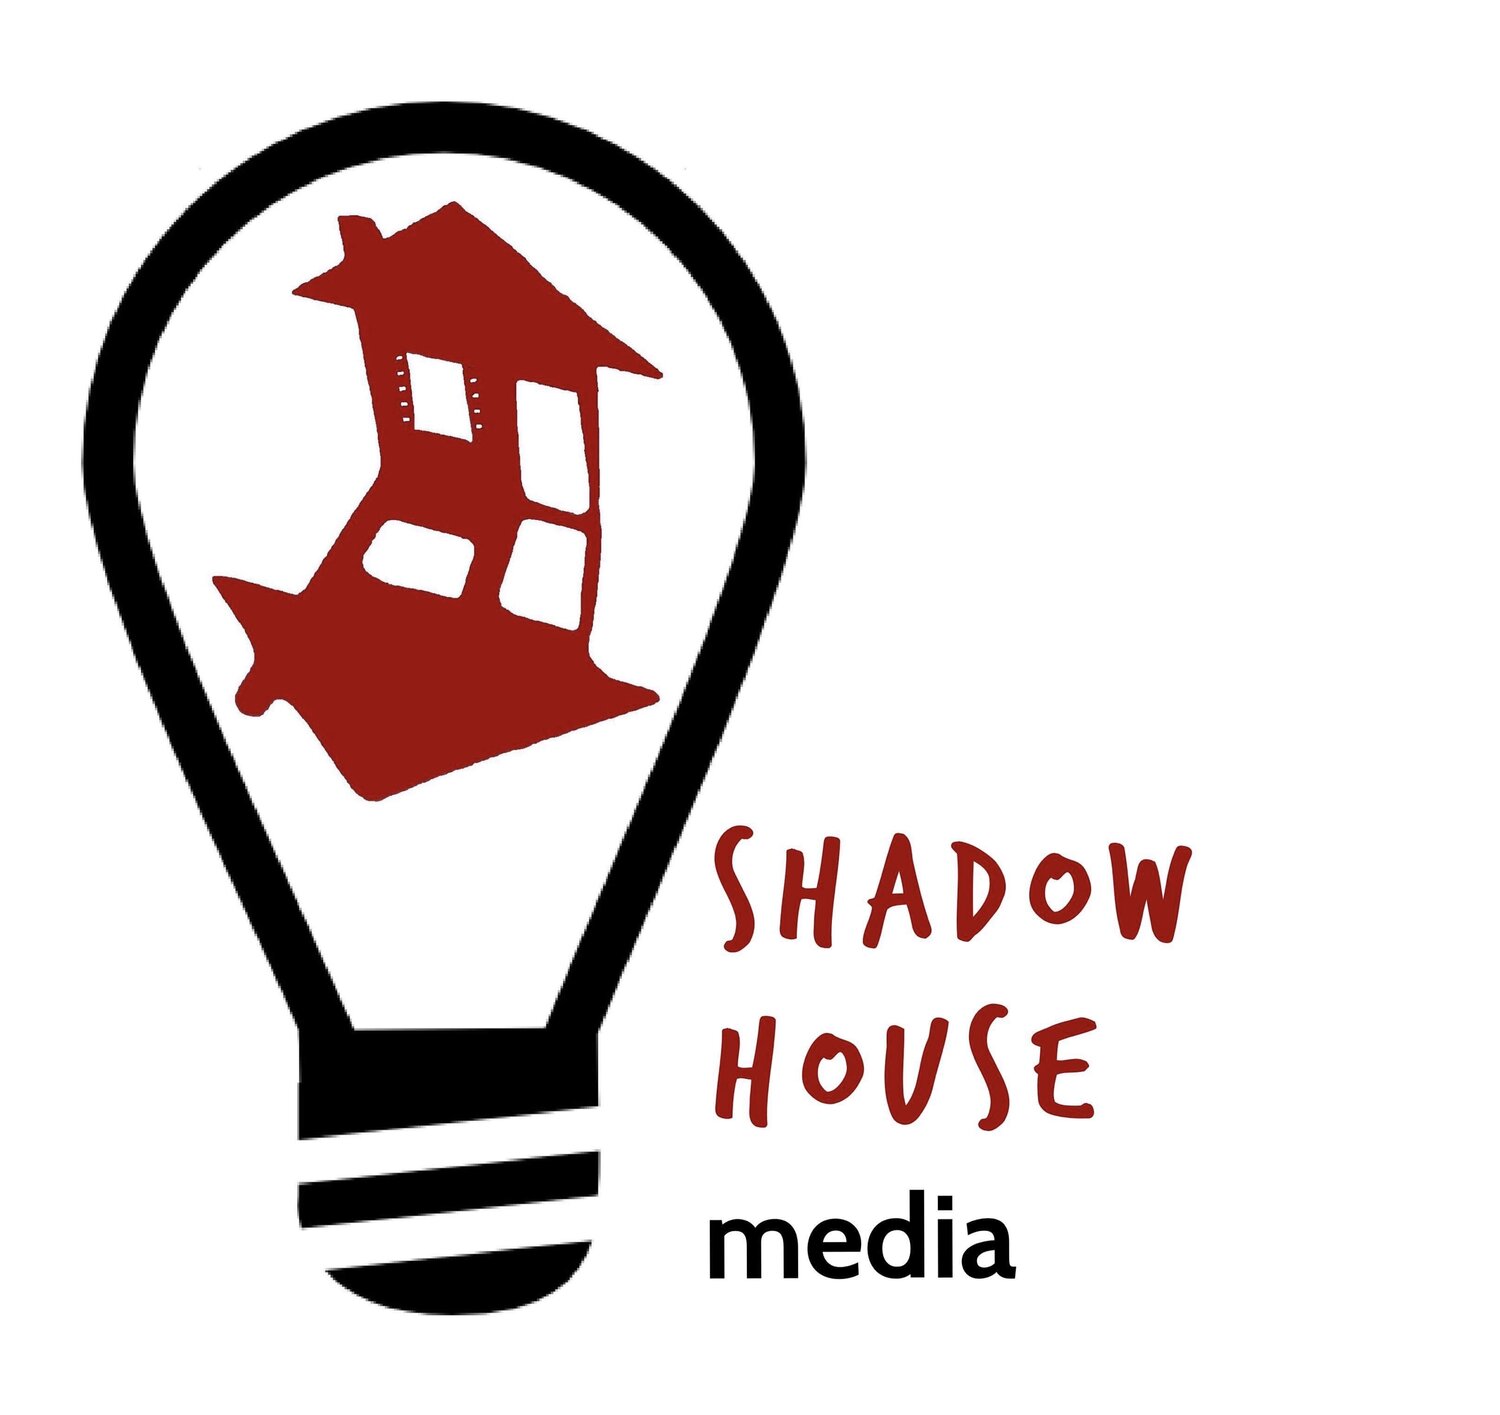 SHADOW HOUSE MEDIA